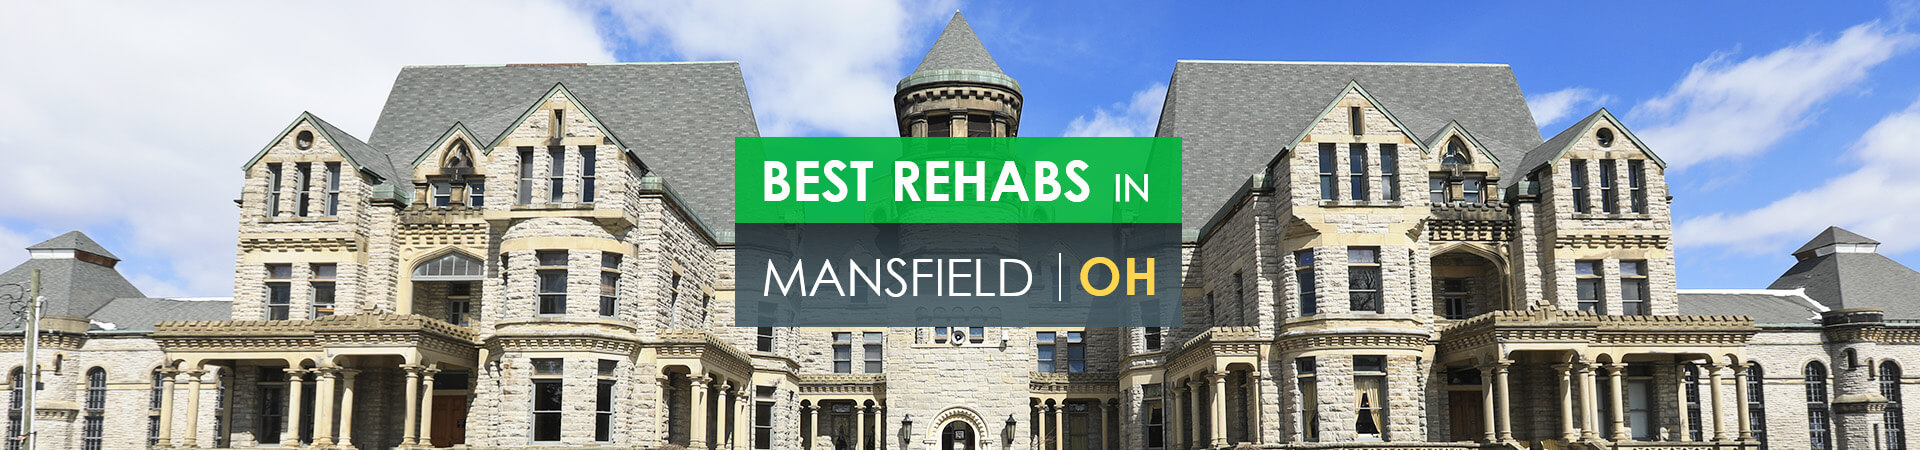 Best rehabs in Mansfield, OH